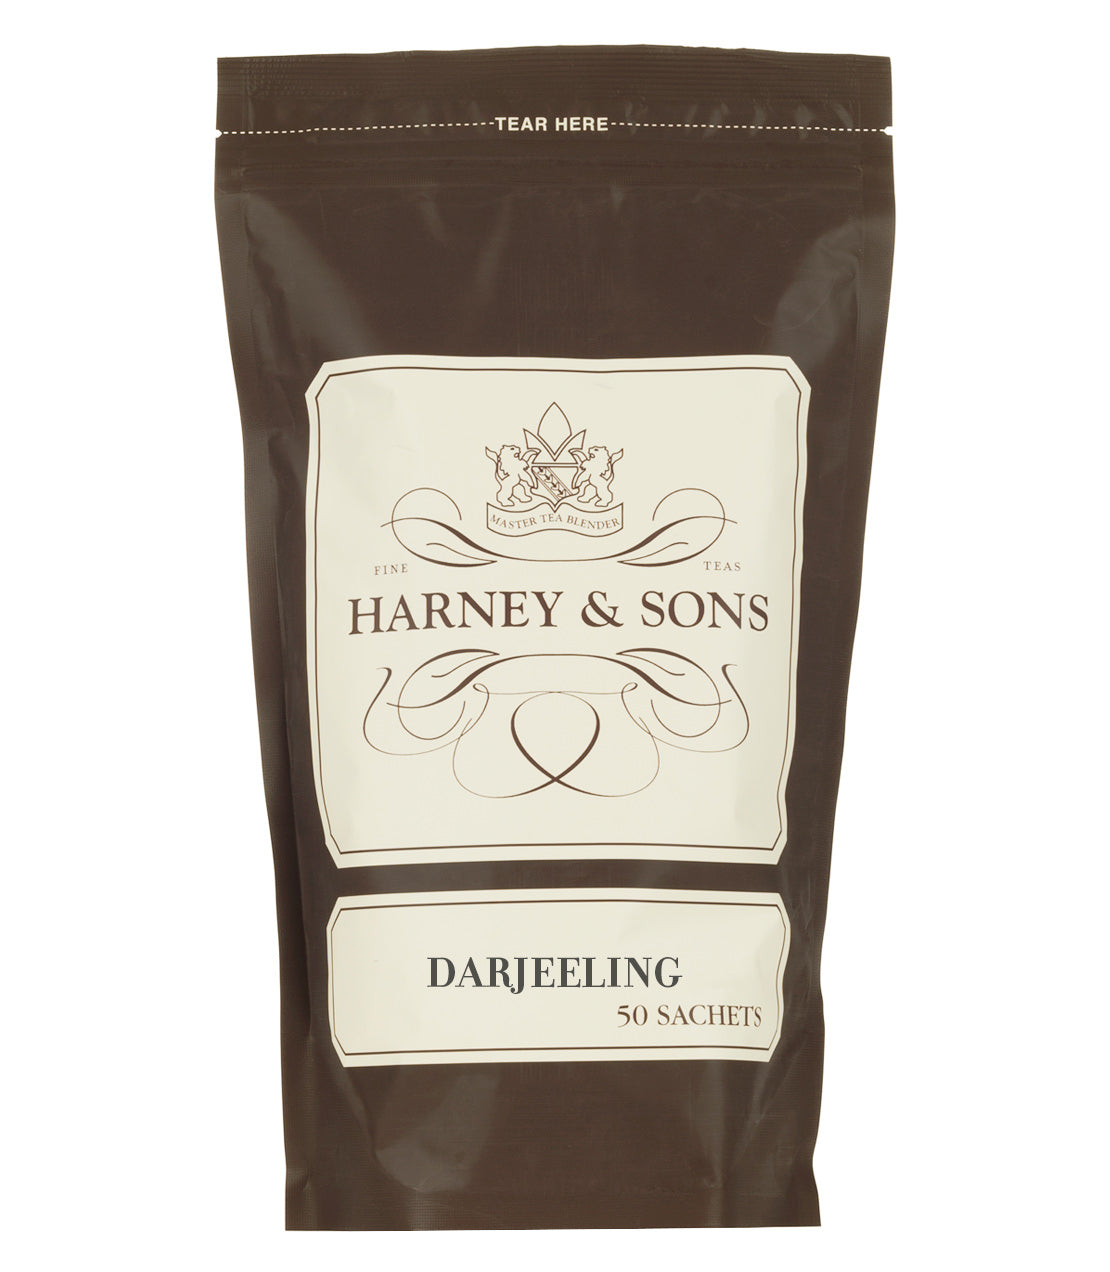 Darjeeling, Bag of 50 Sachets - Sachets Bag of 50 Sachets - Harney & Sons Fine Teas